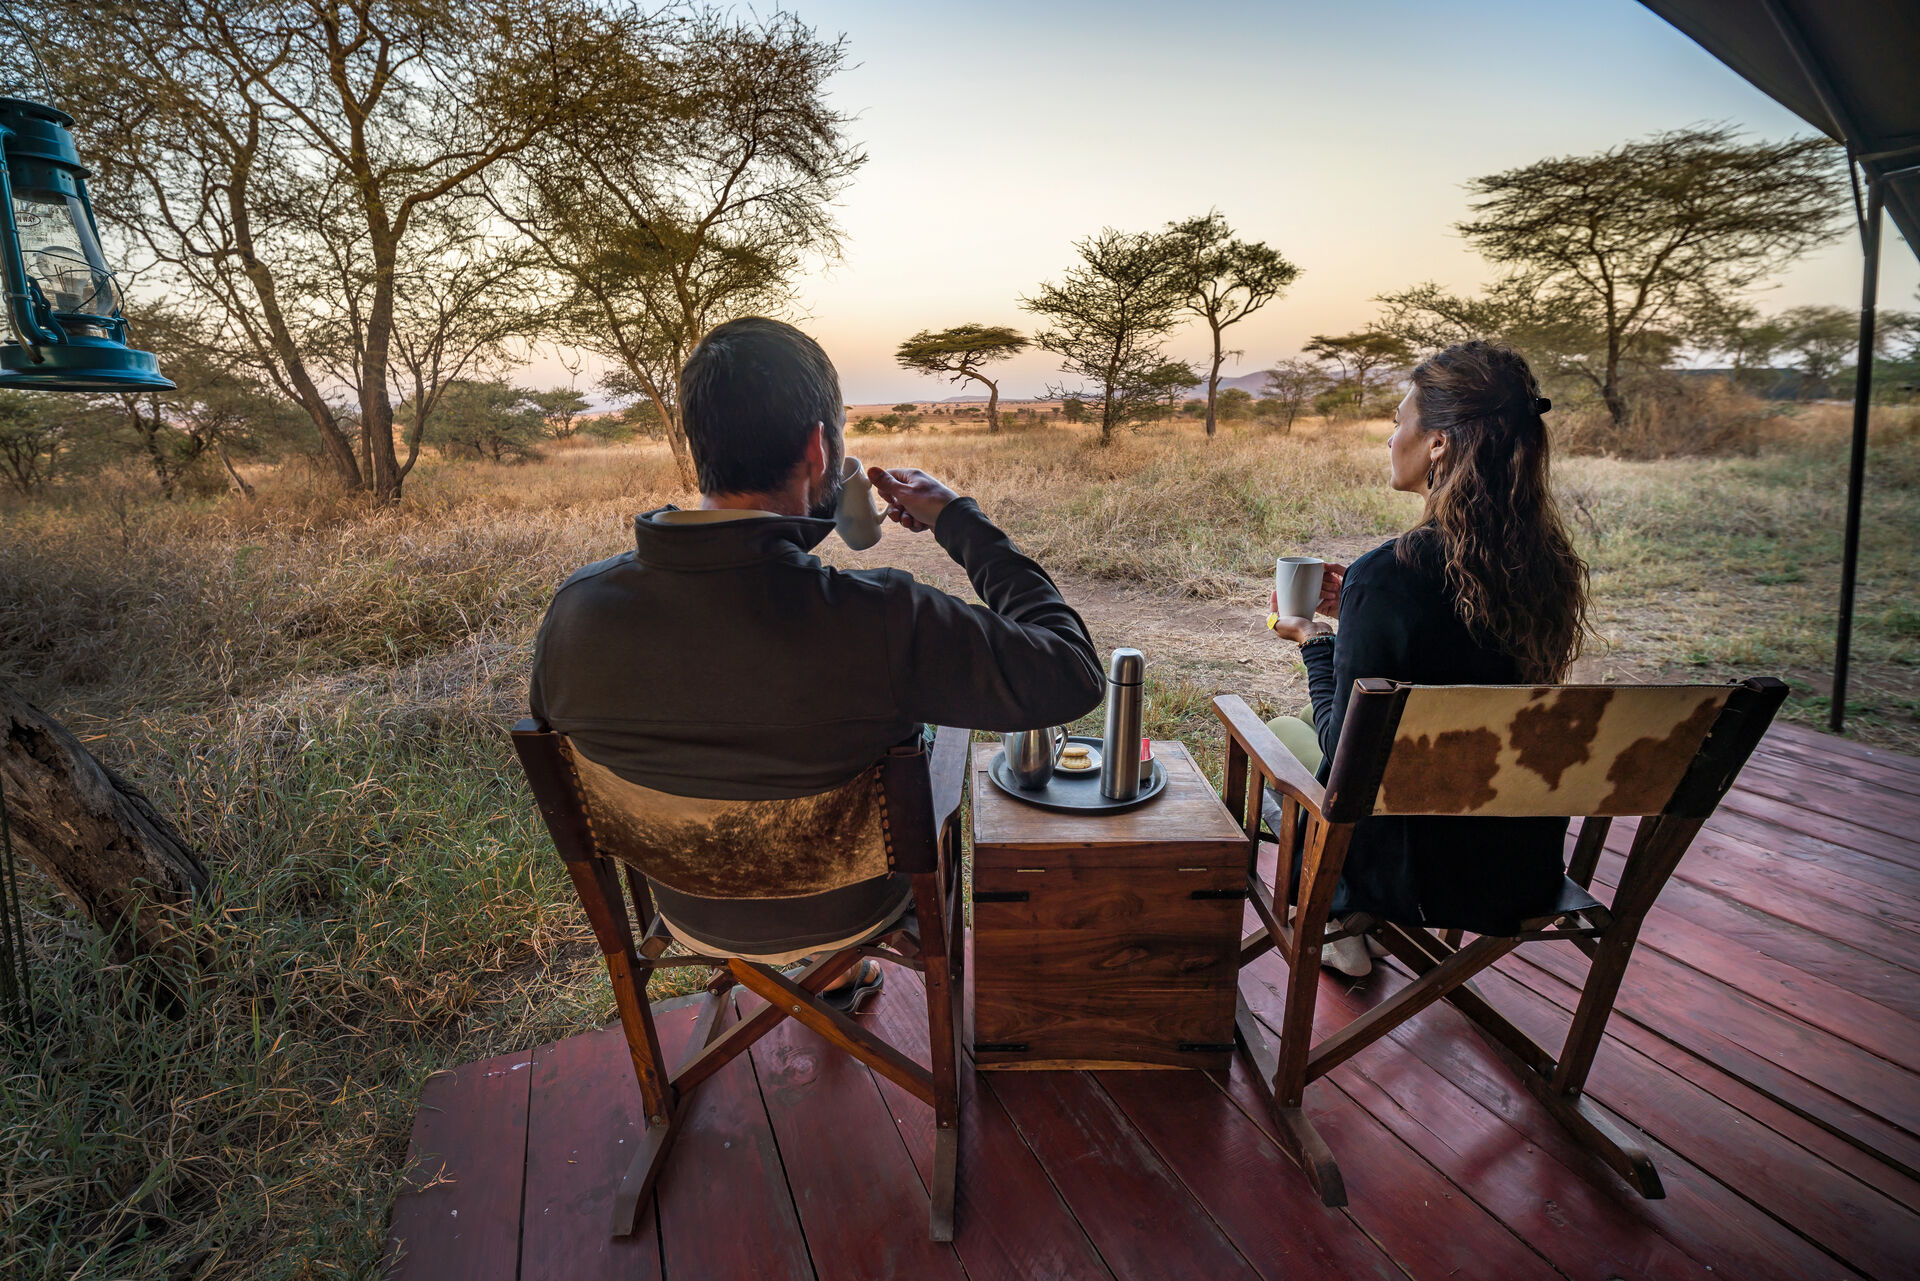 Central Serengeti – all year round